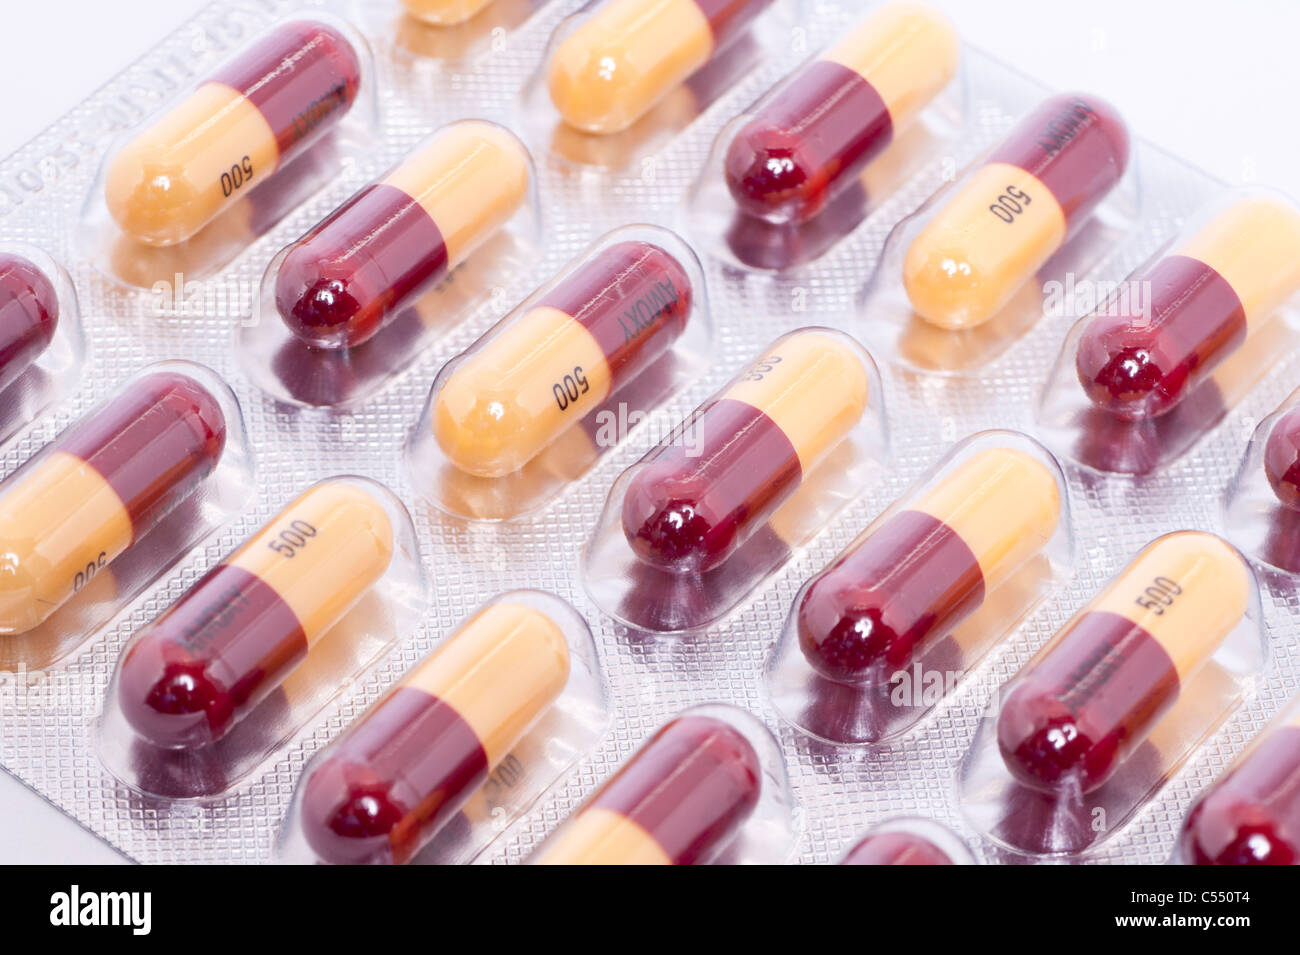 Eine Blisterpackung von 500mg Amoxicillin Kapseln (Antibiotika) Stockfoto